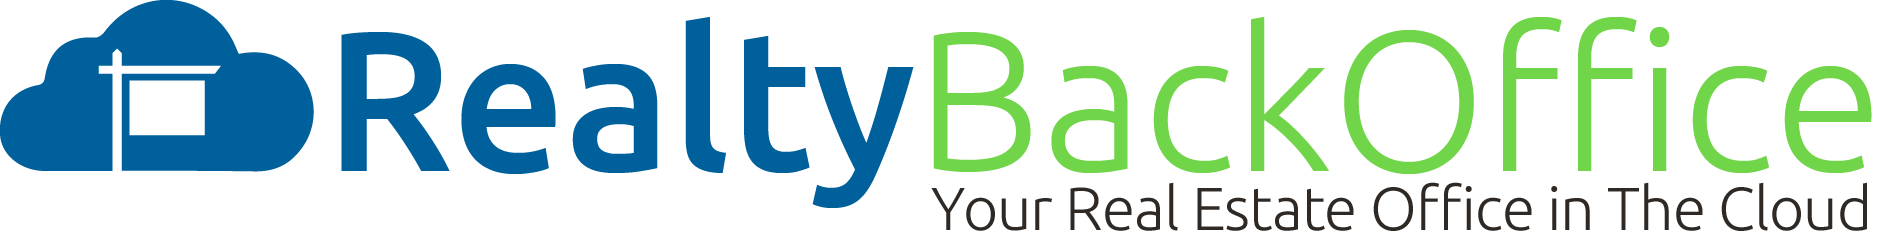 RealtyBackOffice logo